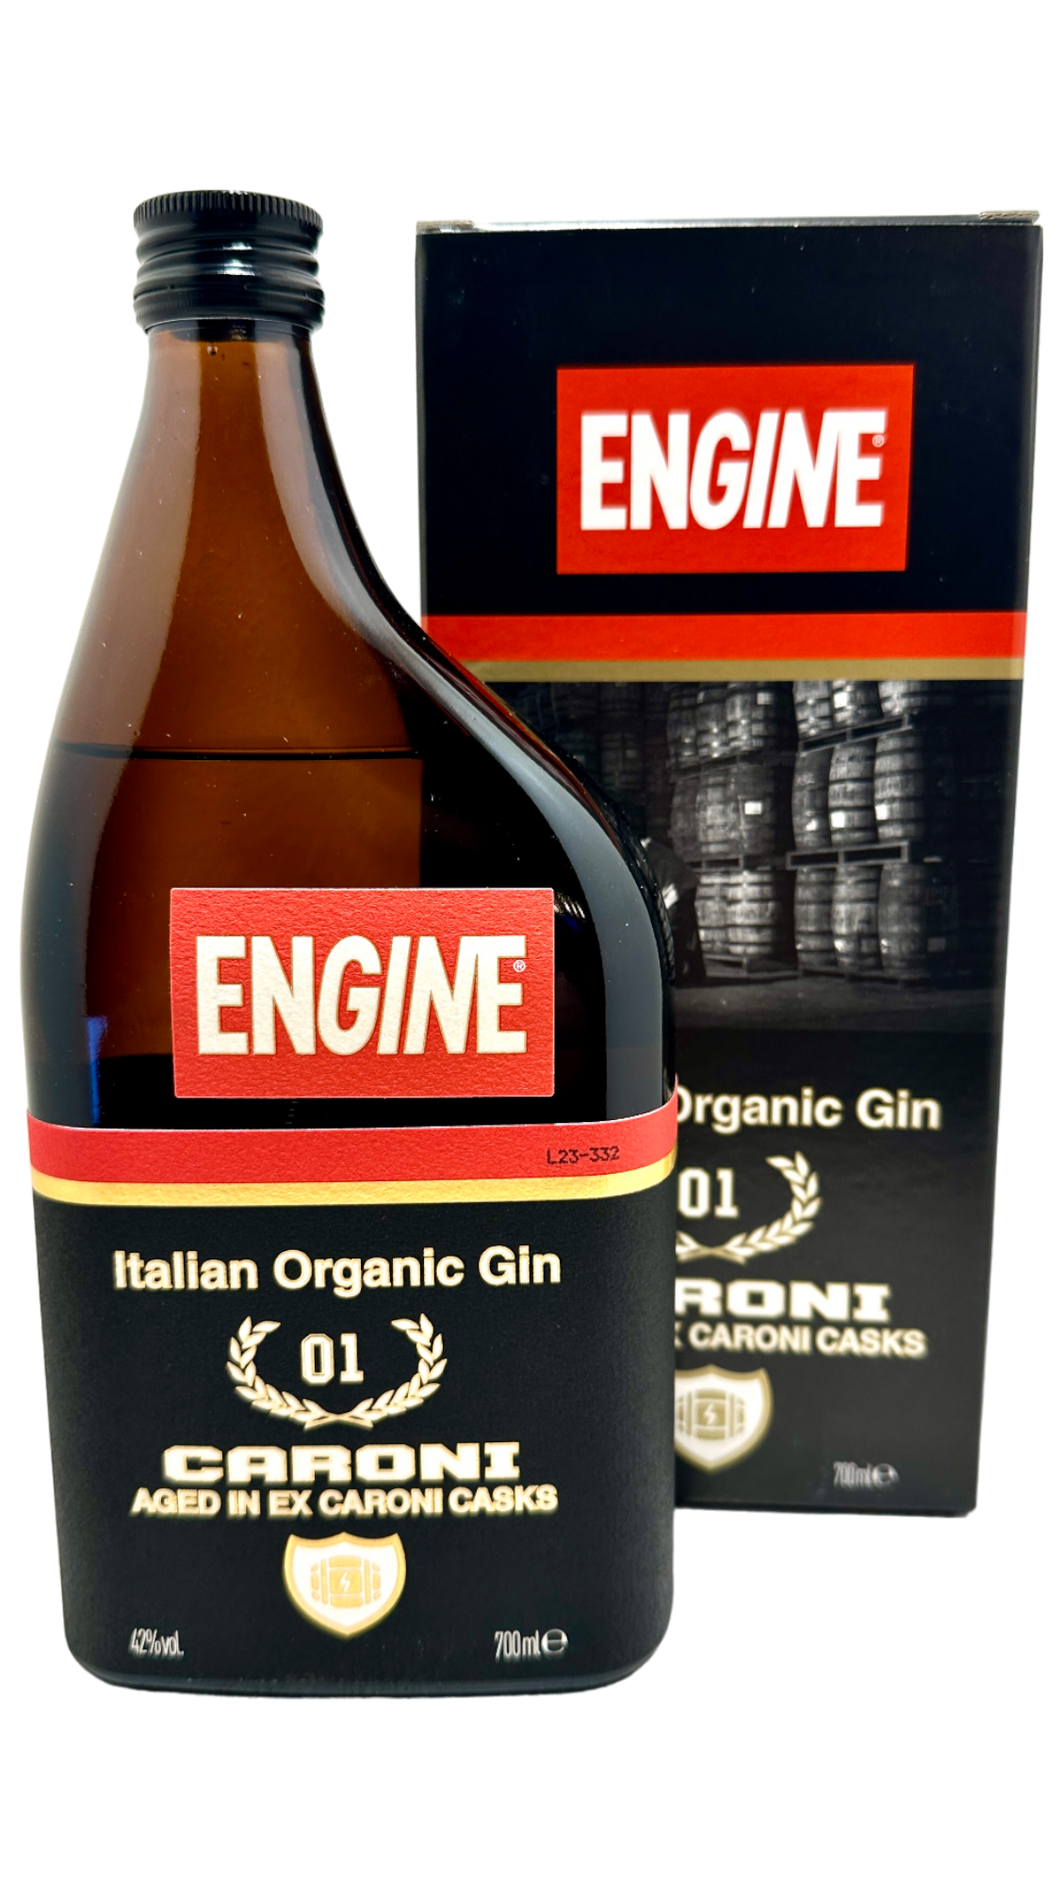 Gin Engine ex Caroni casks spiri spiritueux trinidad et tobago gin bio organic italie italy